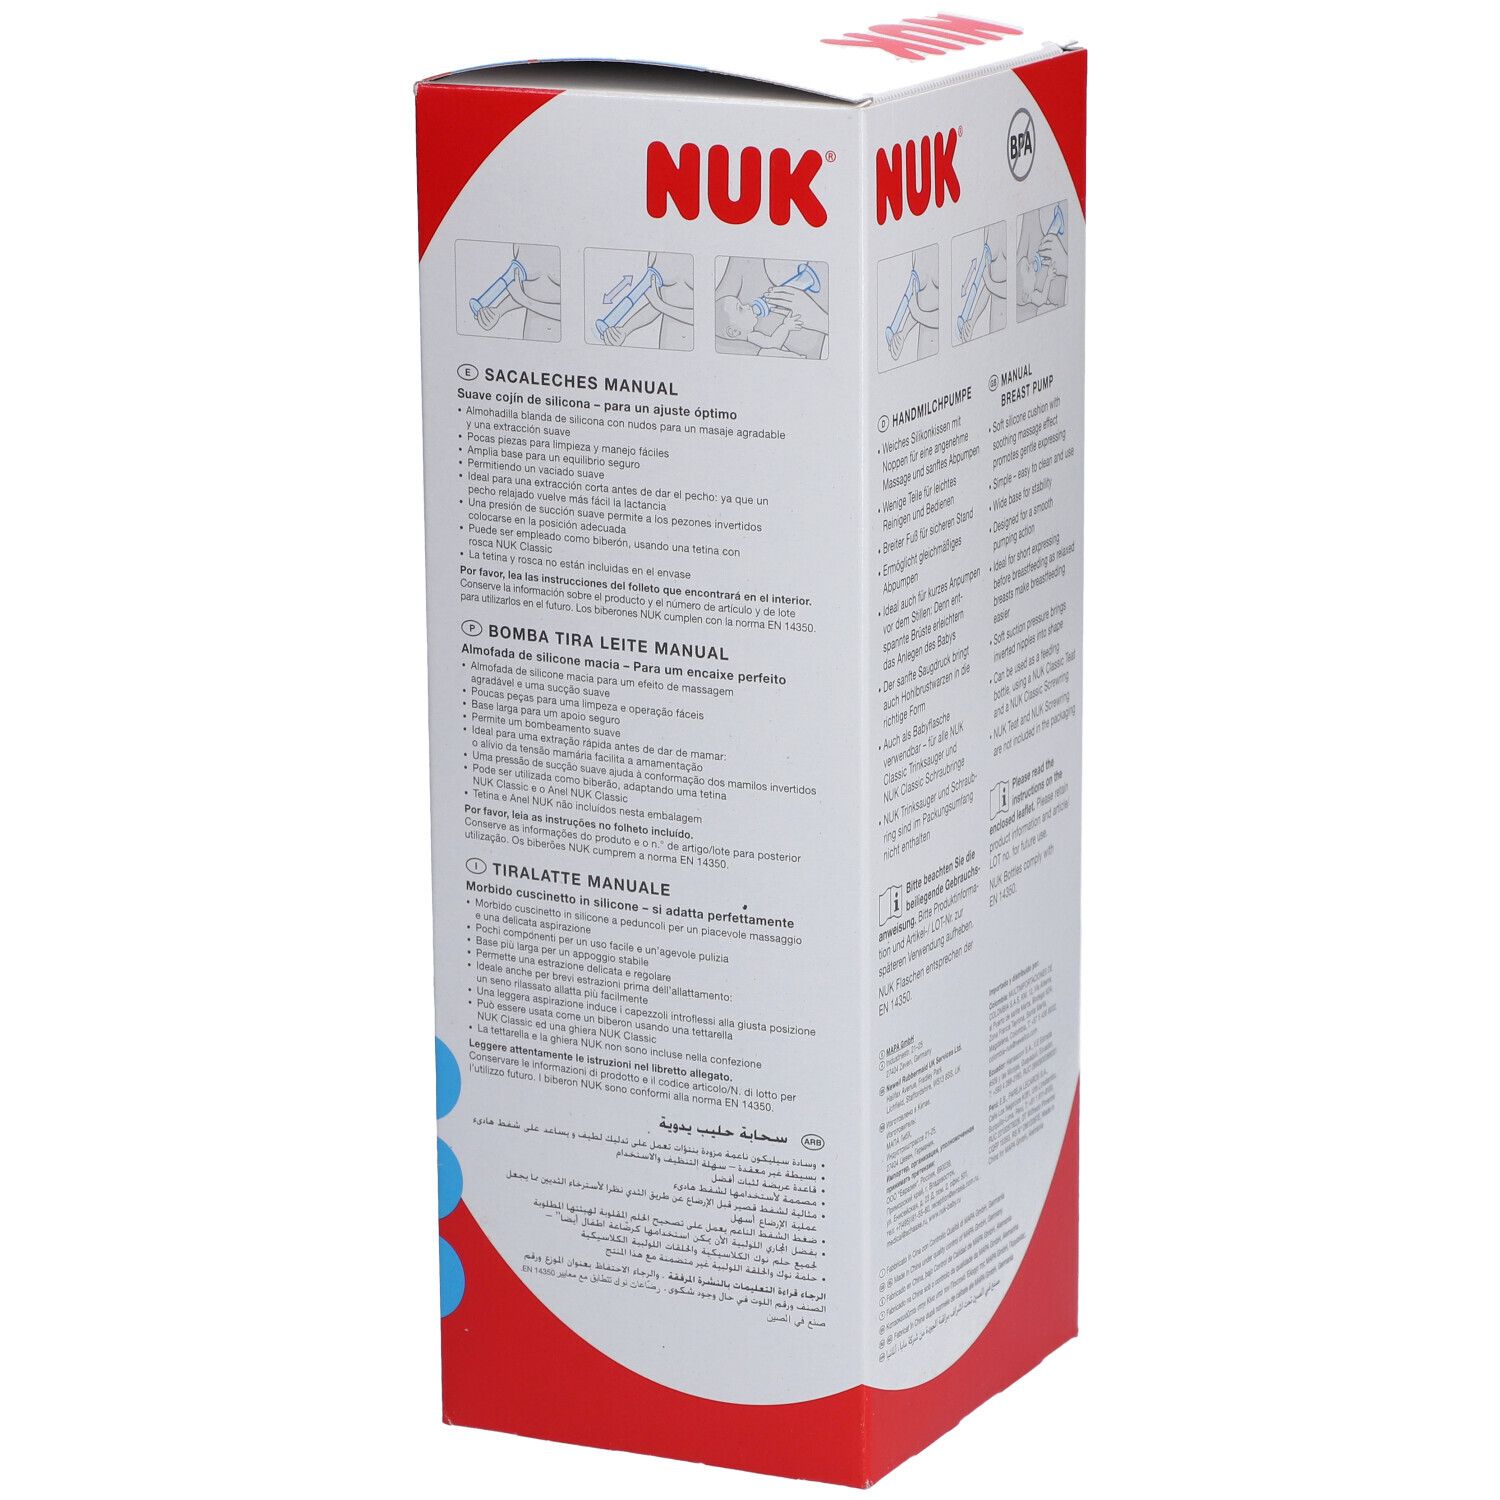 NUK® Soft & Easy Handmilchpumpe